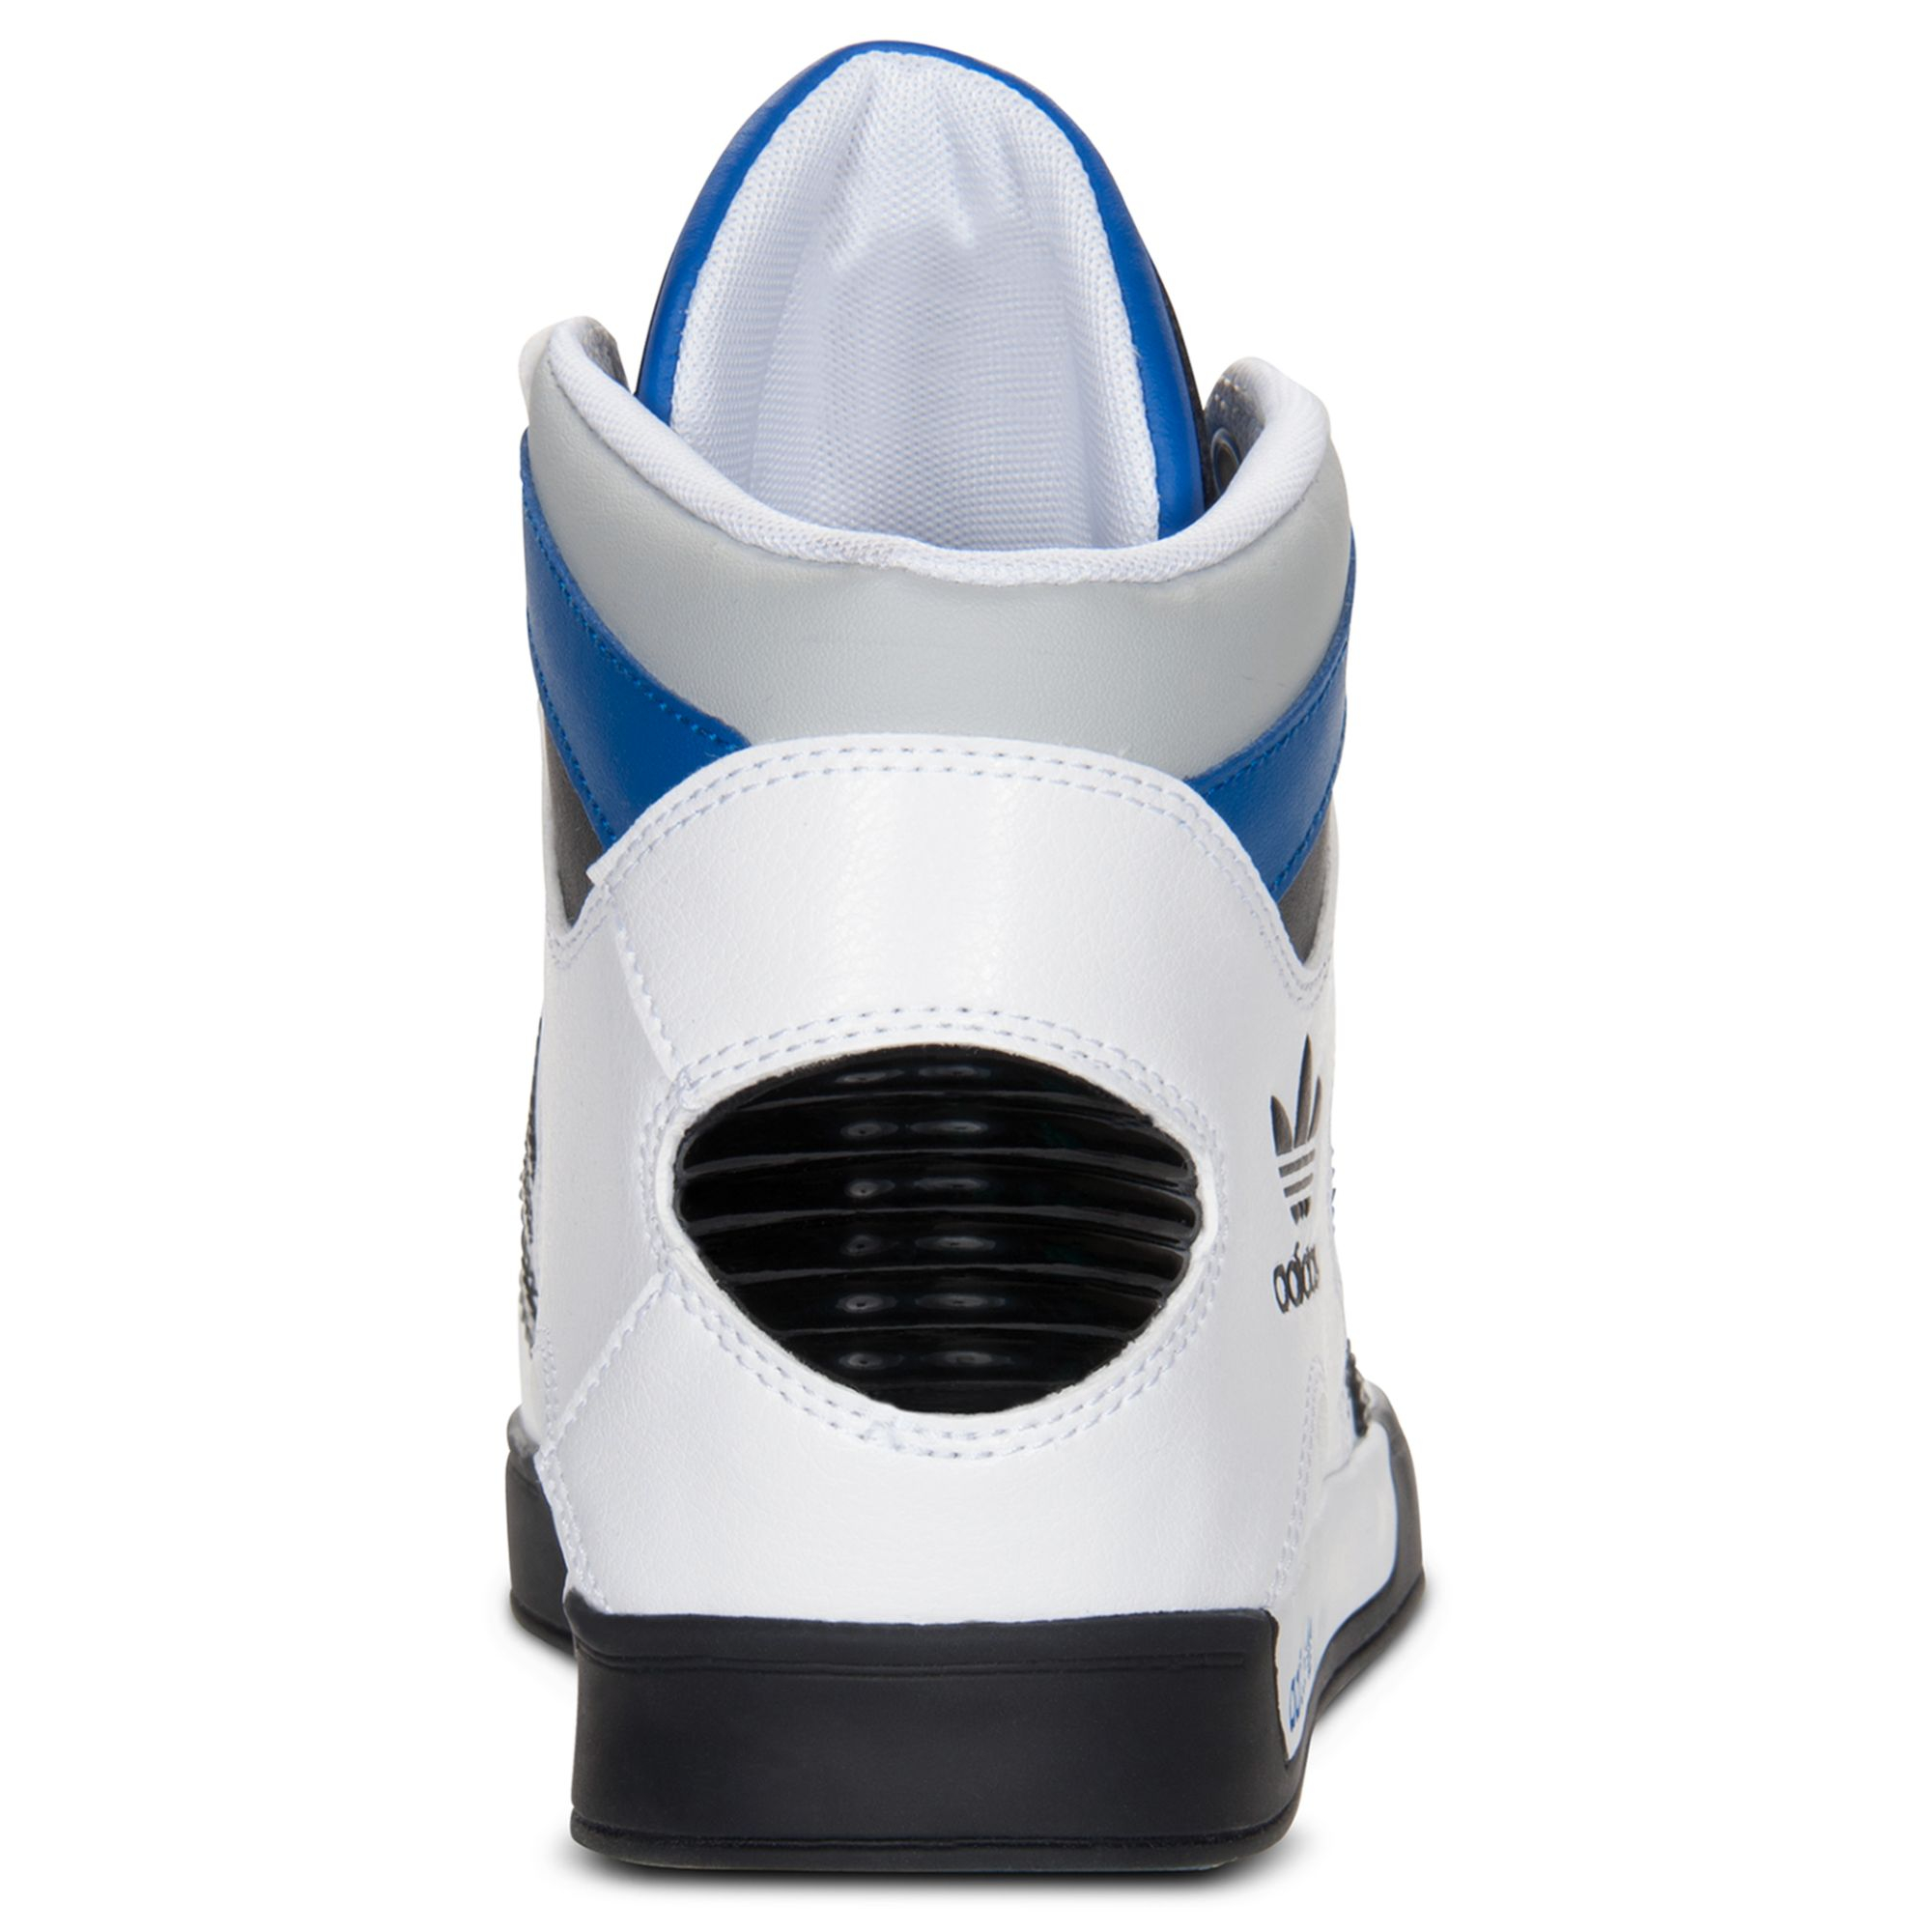 adidas Originals Hard Court Hi Casual Sneakers in White/Black/Blue (Black)  for Men | Lyst